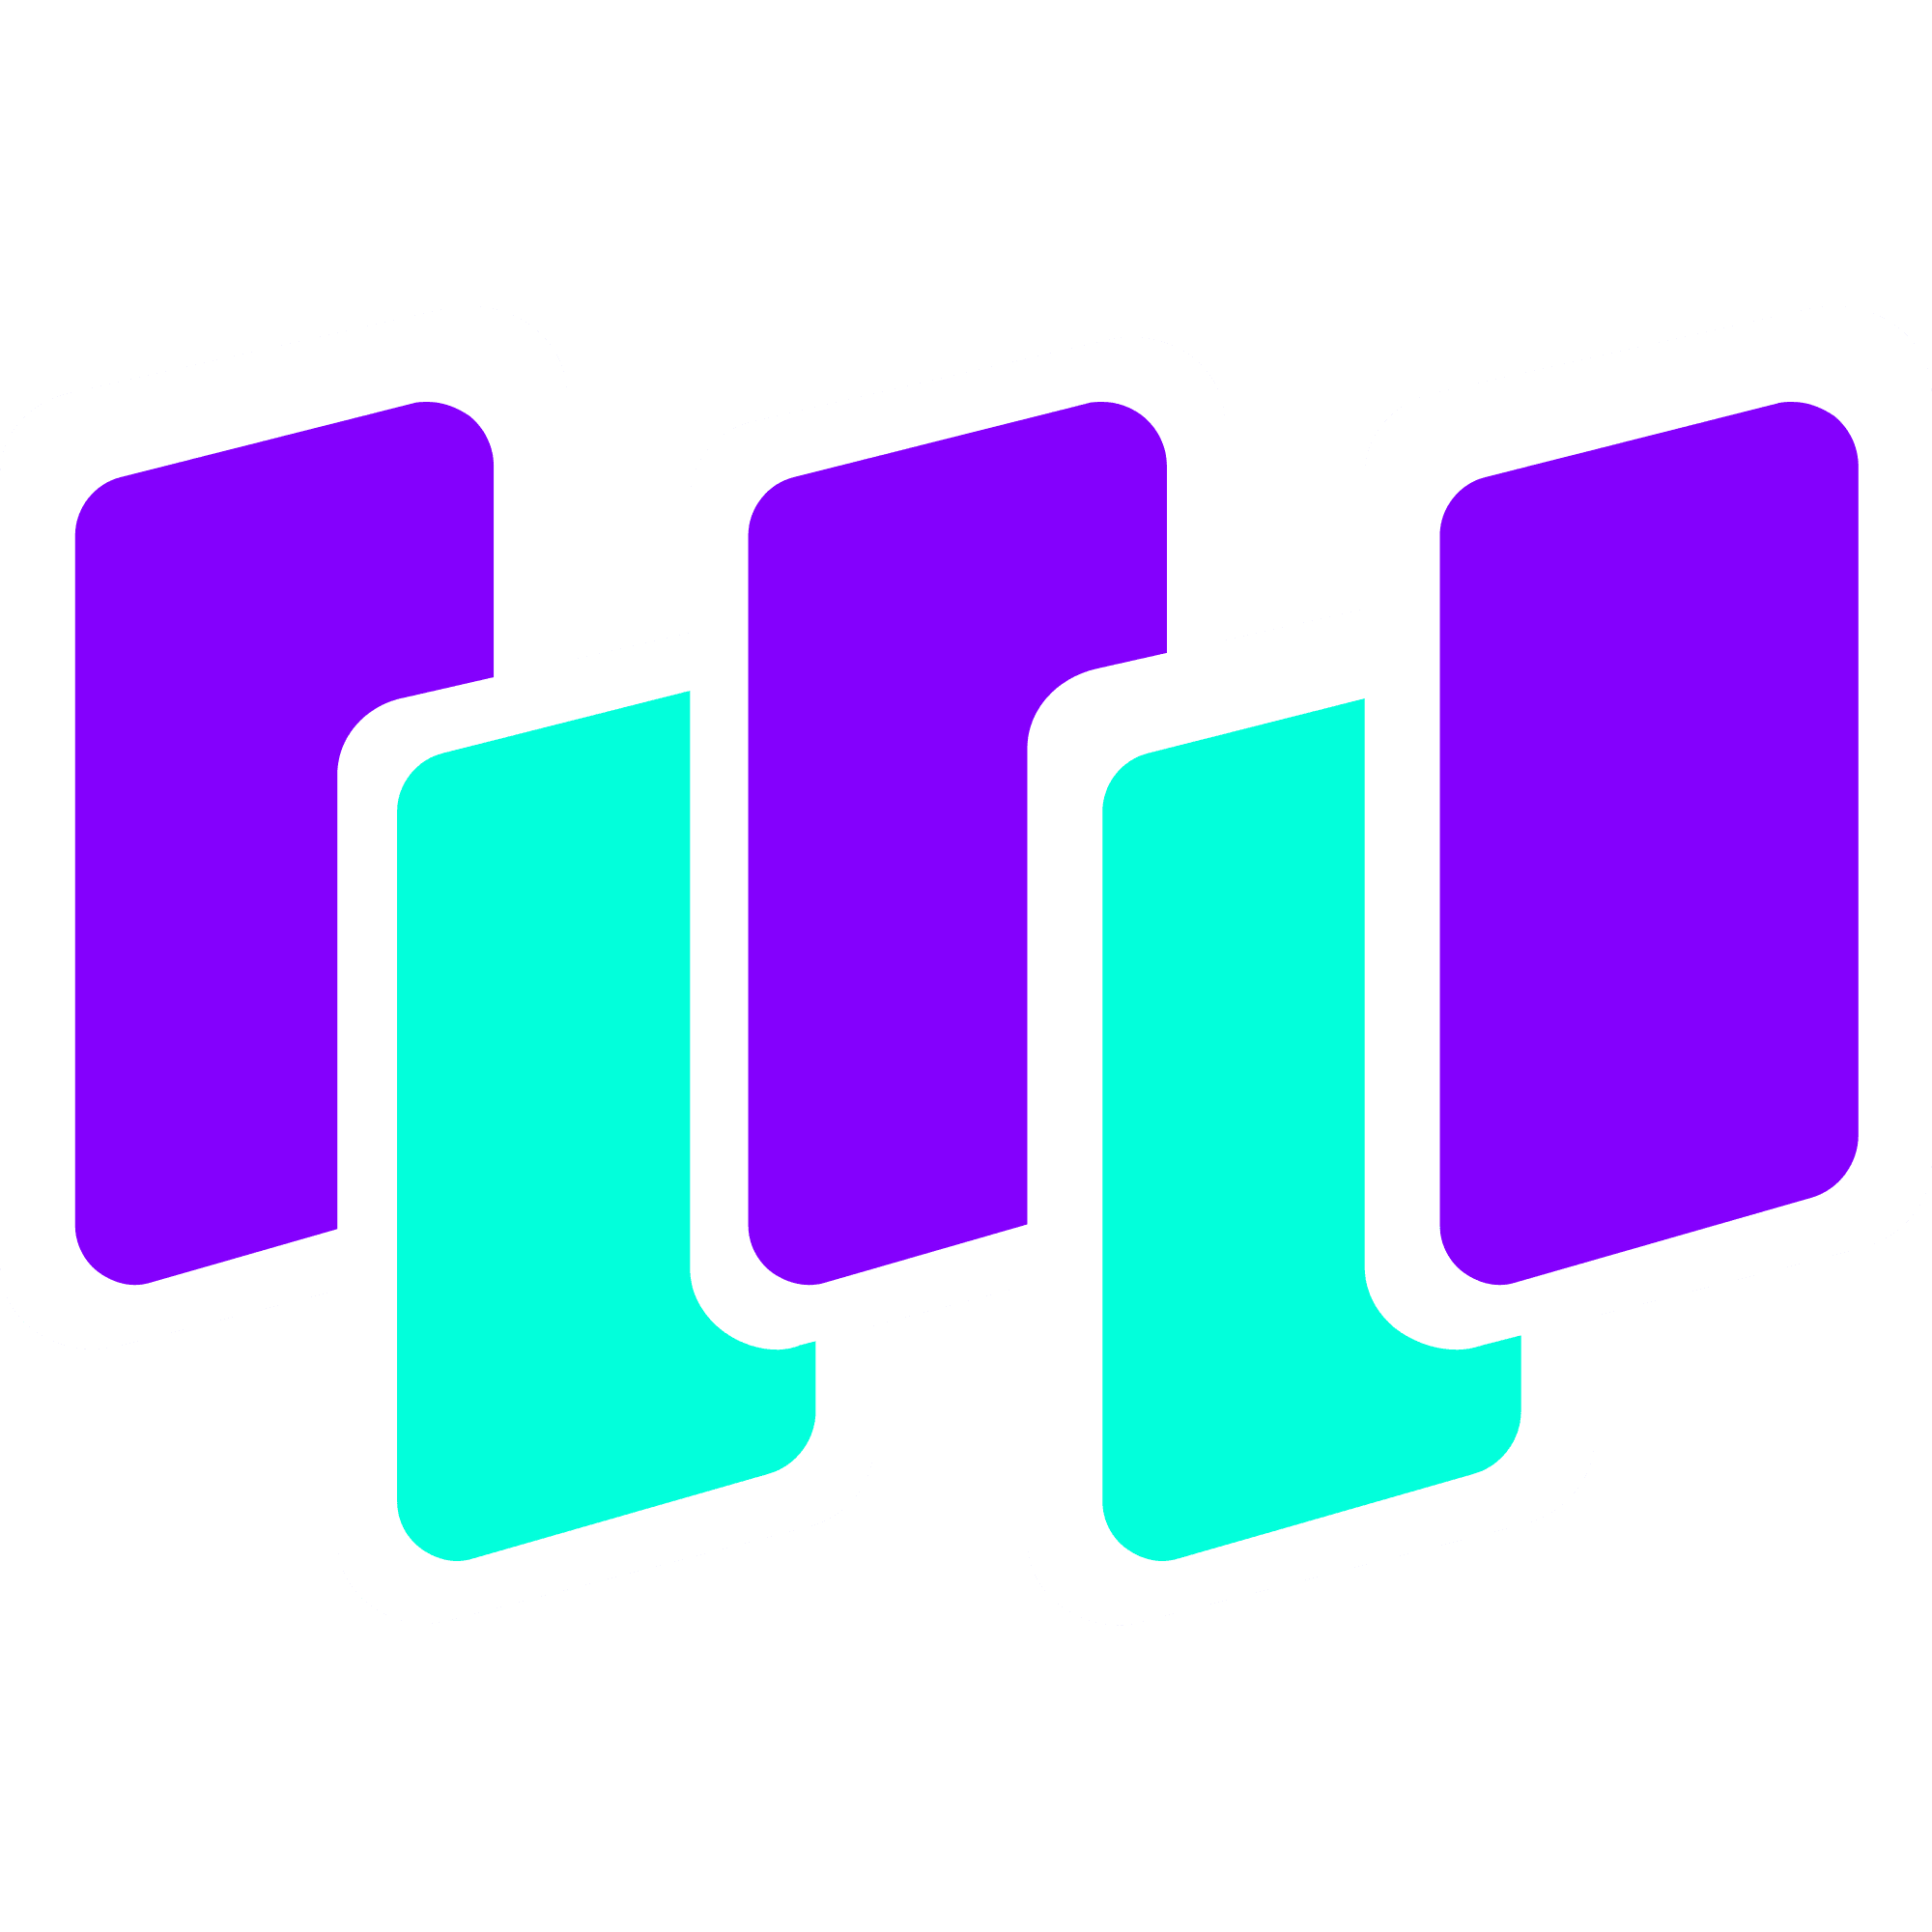 Waltonchain logo in png format